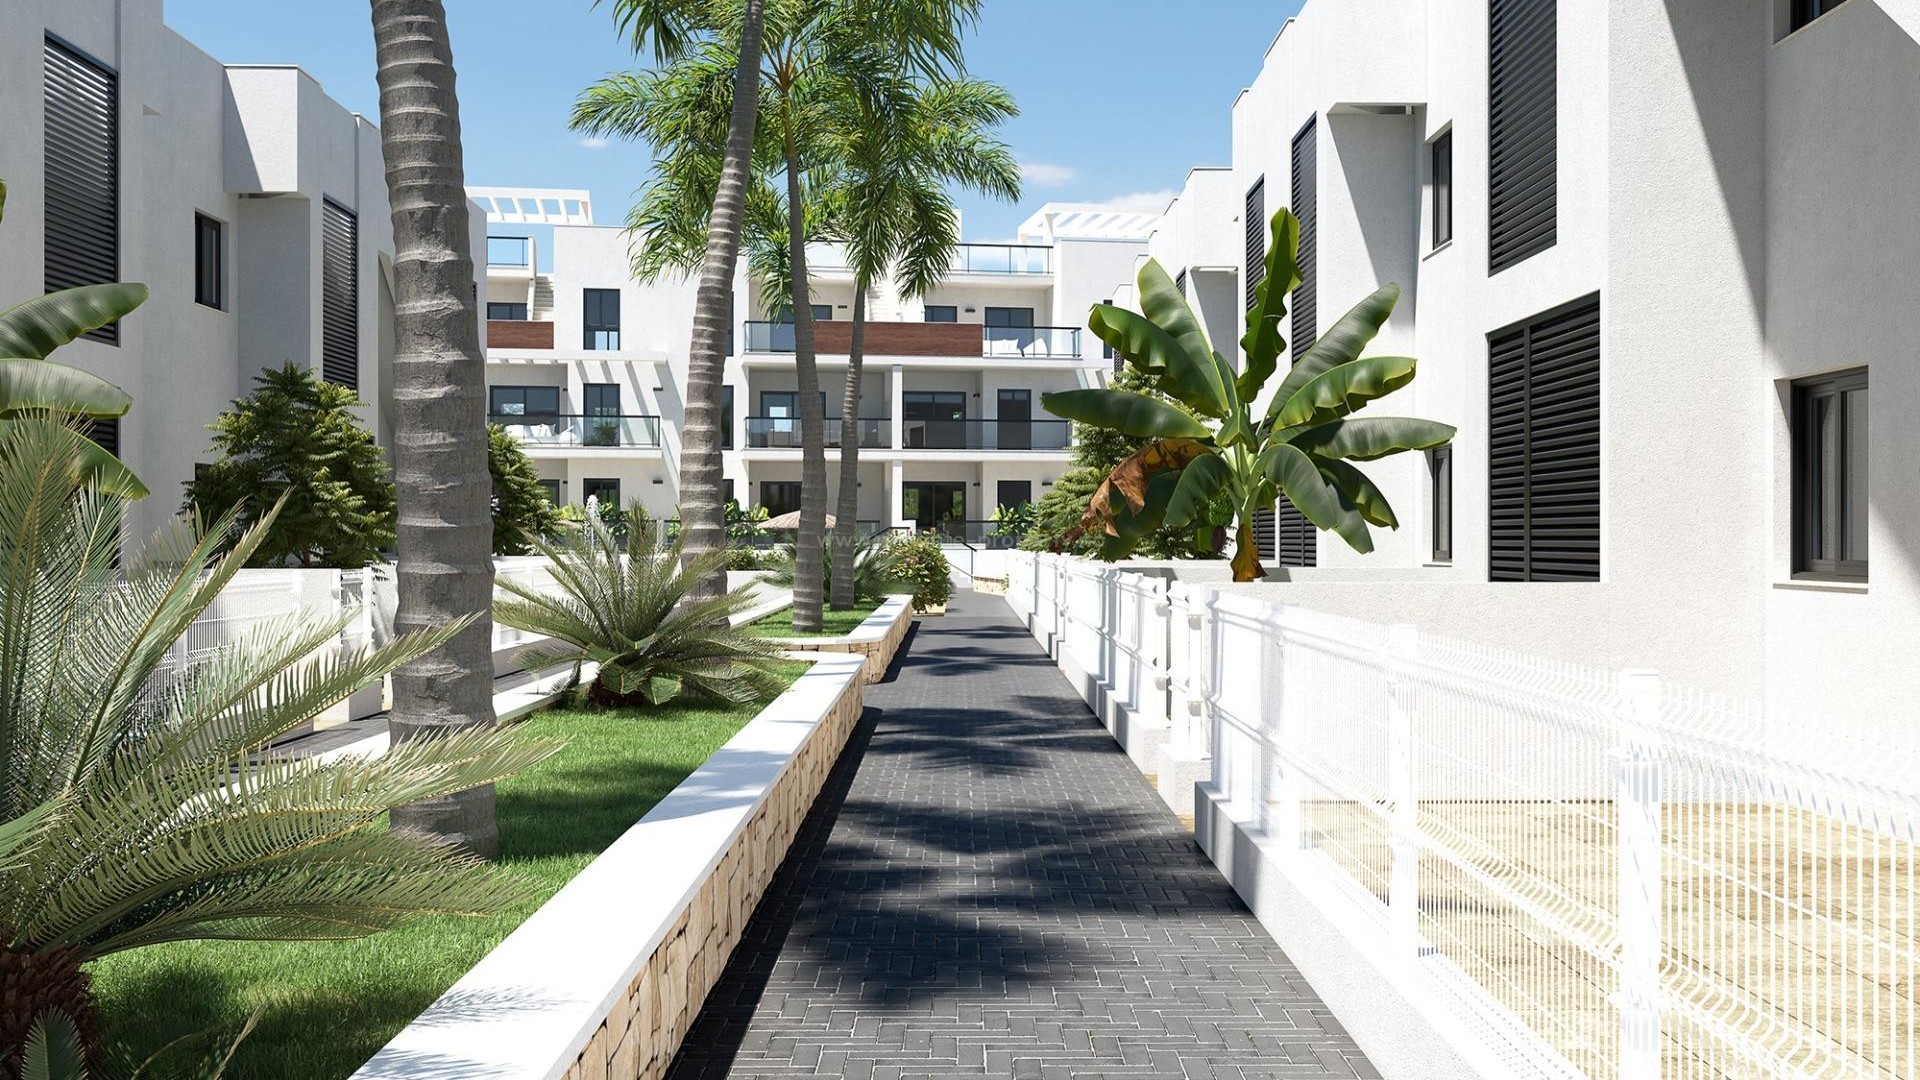 Apartments, penthouses and bungalows in Torre de La Horadada, 2/3 bedrooms, 2 bathrooms, 300 meters from the beach, garden or solarium